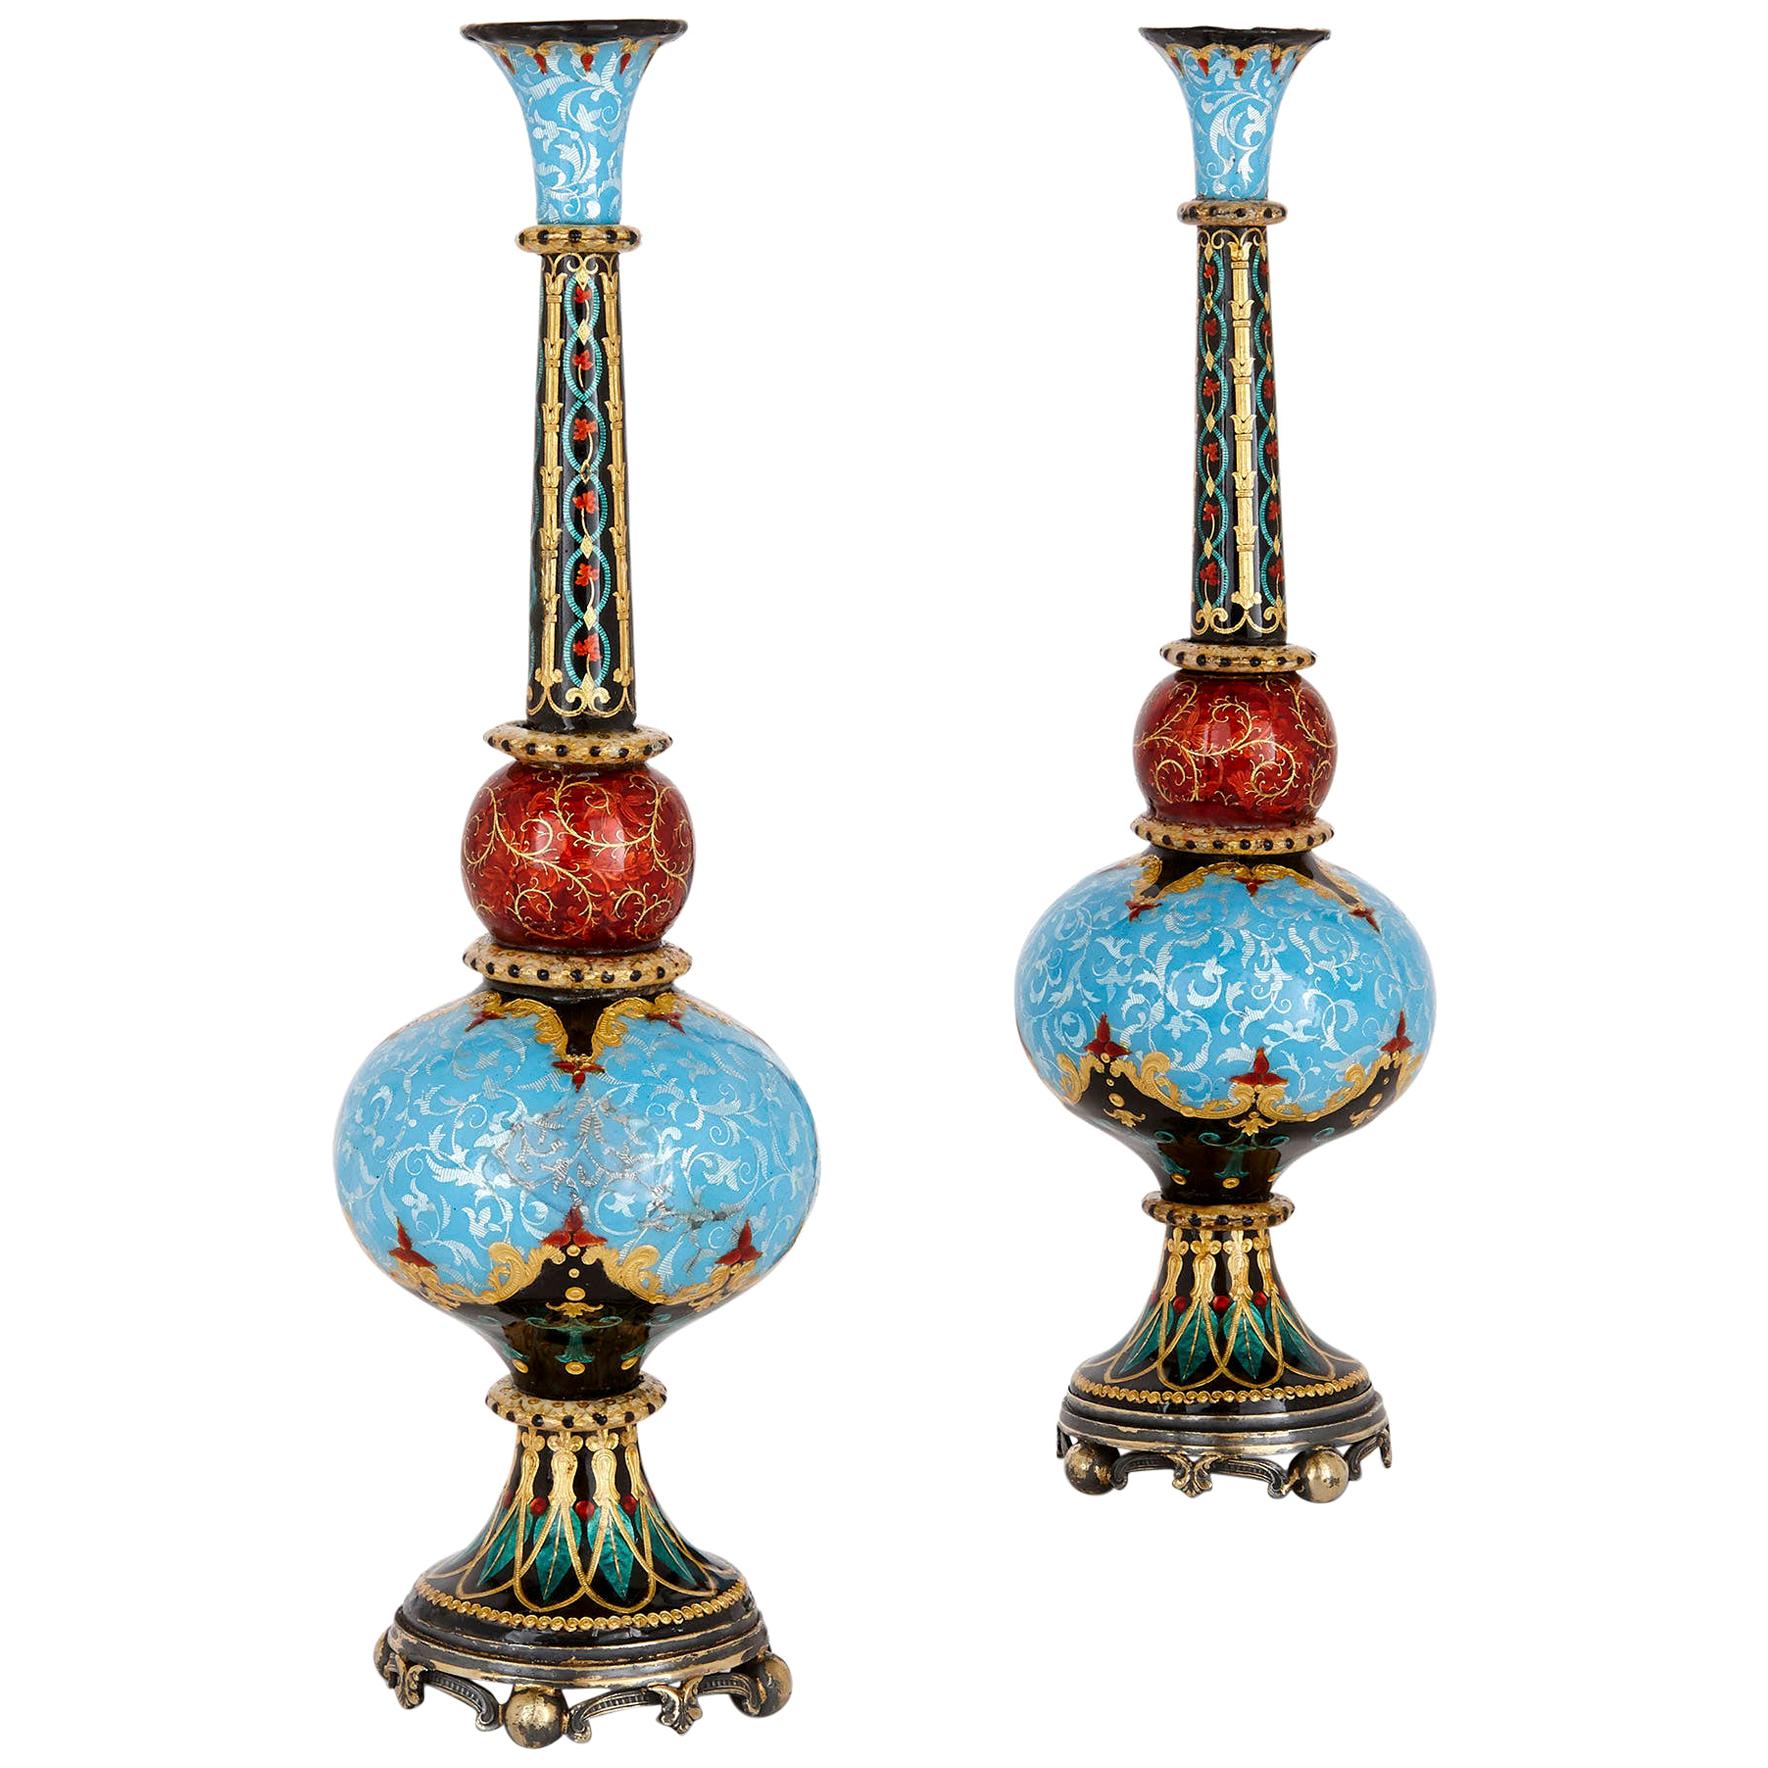 Pair of Antique French Arabesque Enamel Vases for Turkish Export